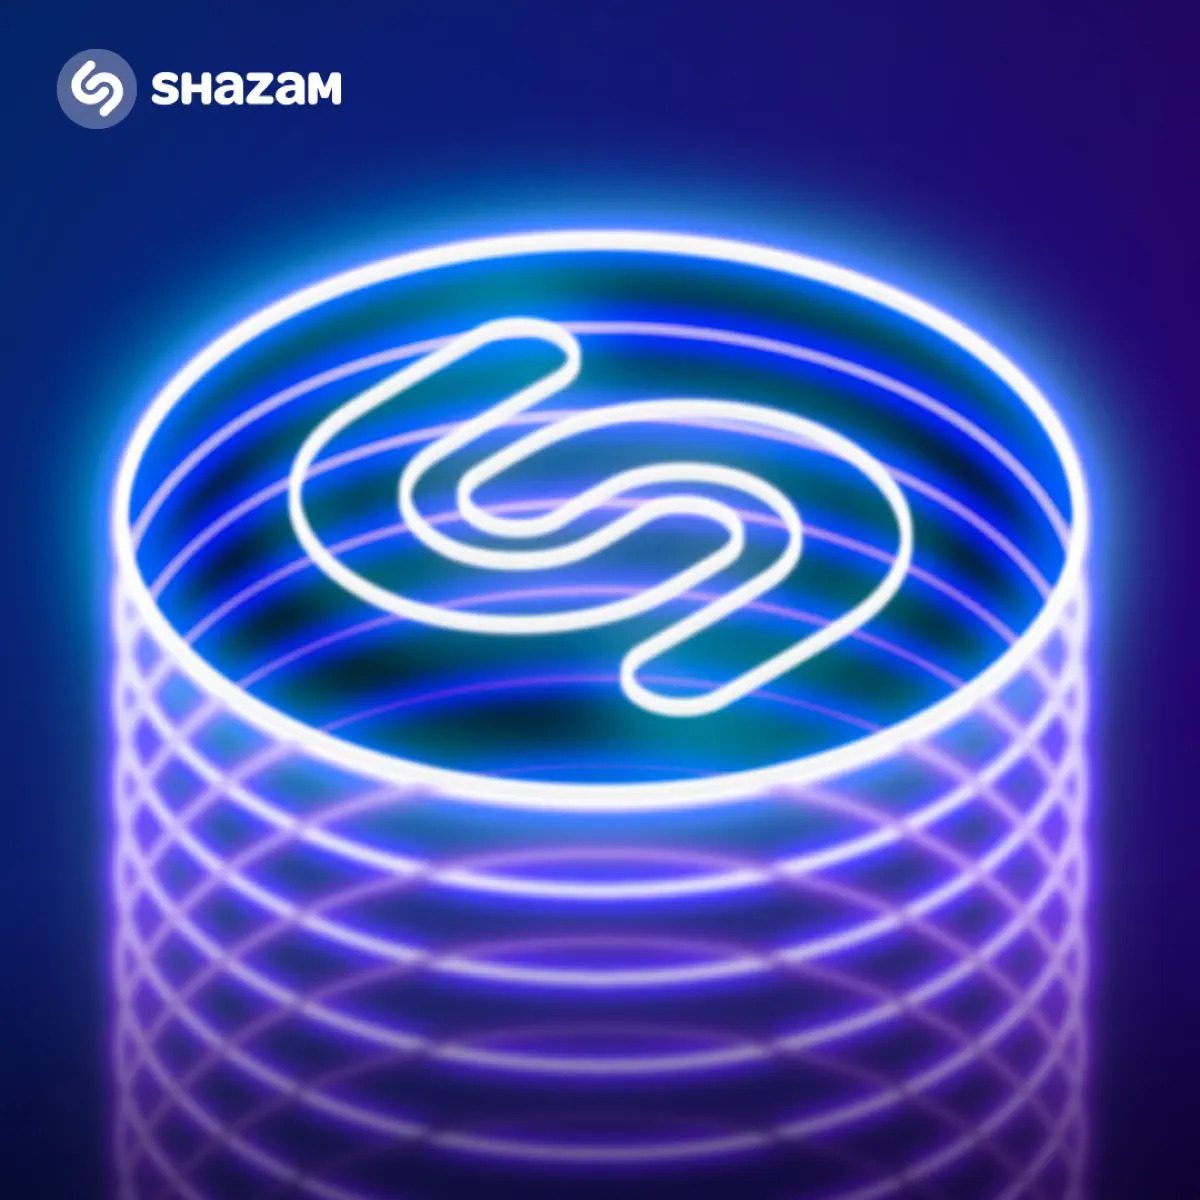 Apple celebrates 20 years of Shazam with playlist and trivia

